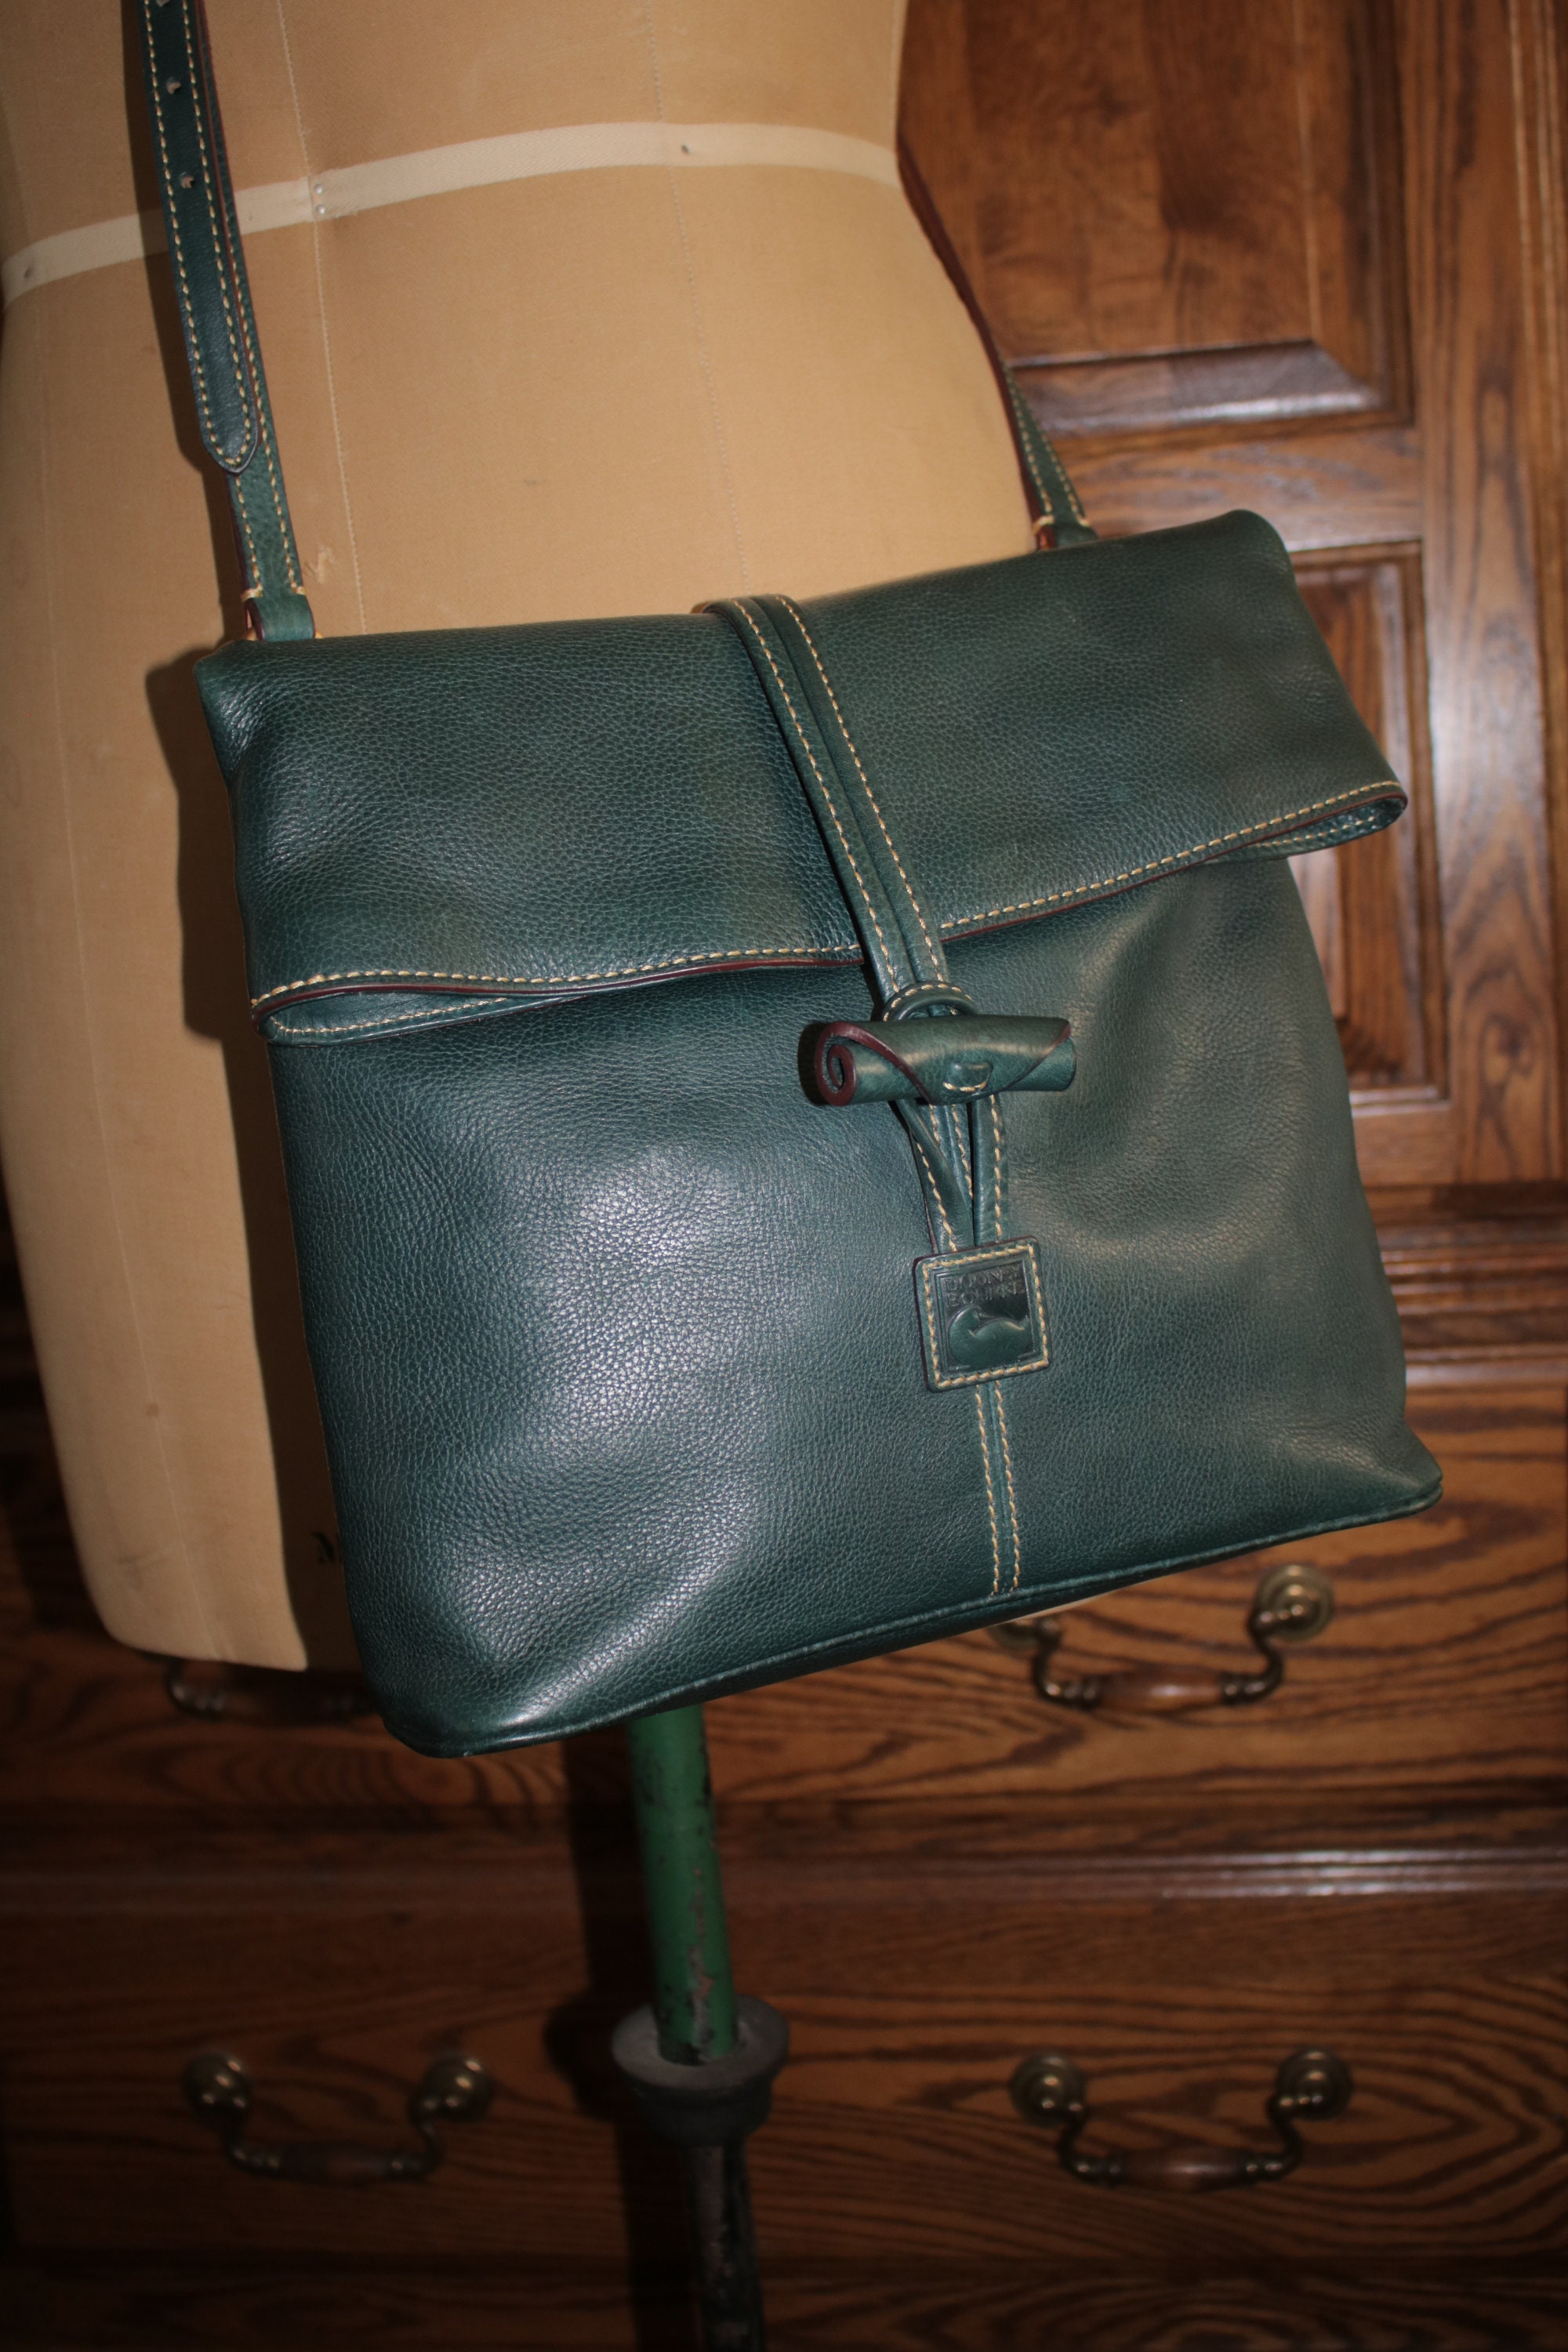 Dooney & Bourke Handbag, Florentine Medium Toggle Crossbody Bag in